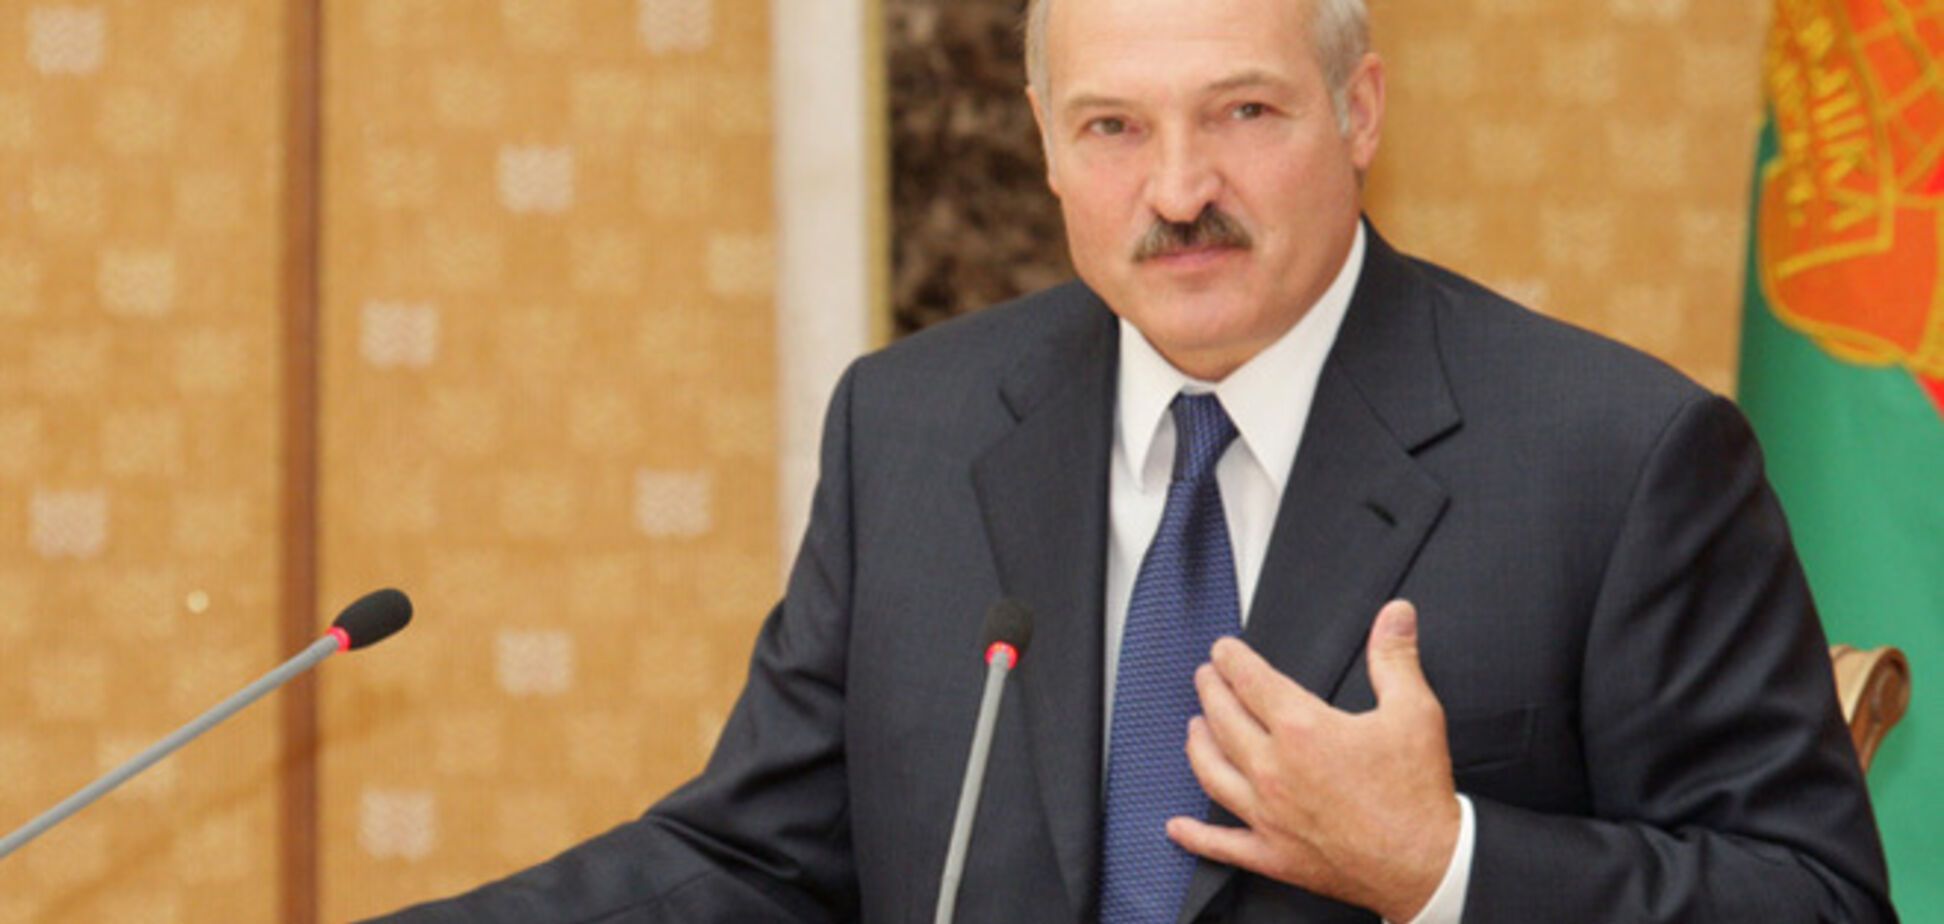 Лукашенко жестко наказал украинских болельщиков ради Путина